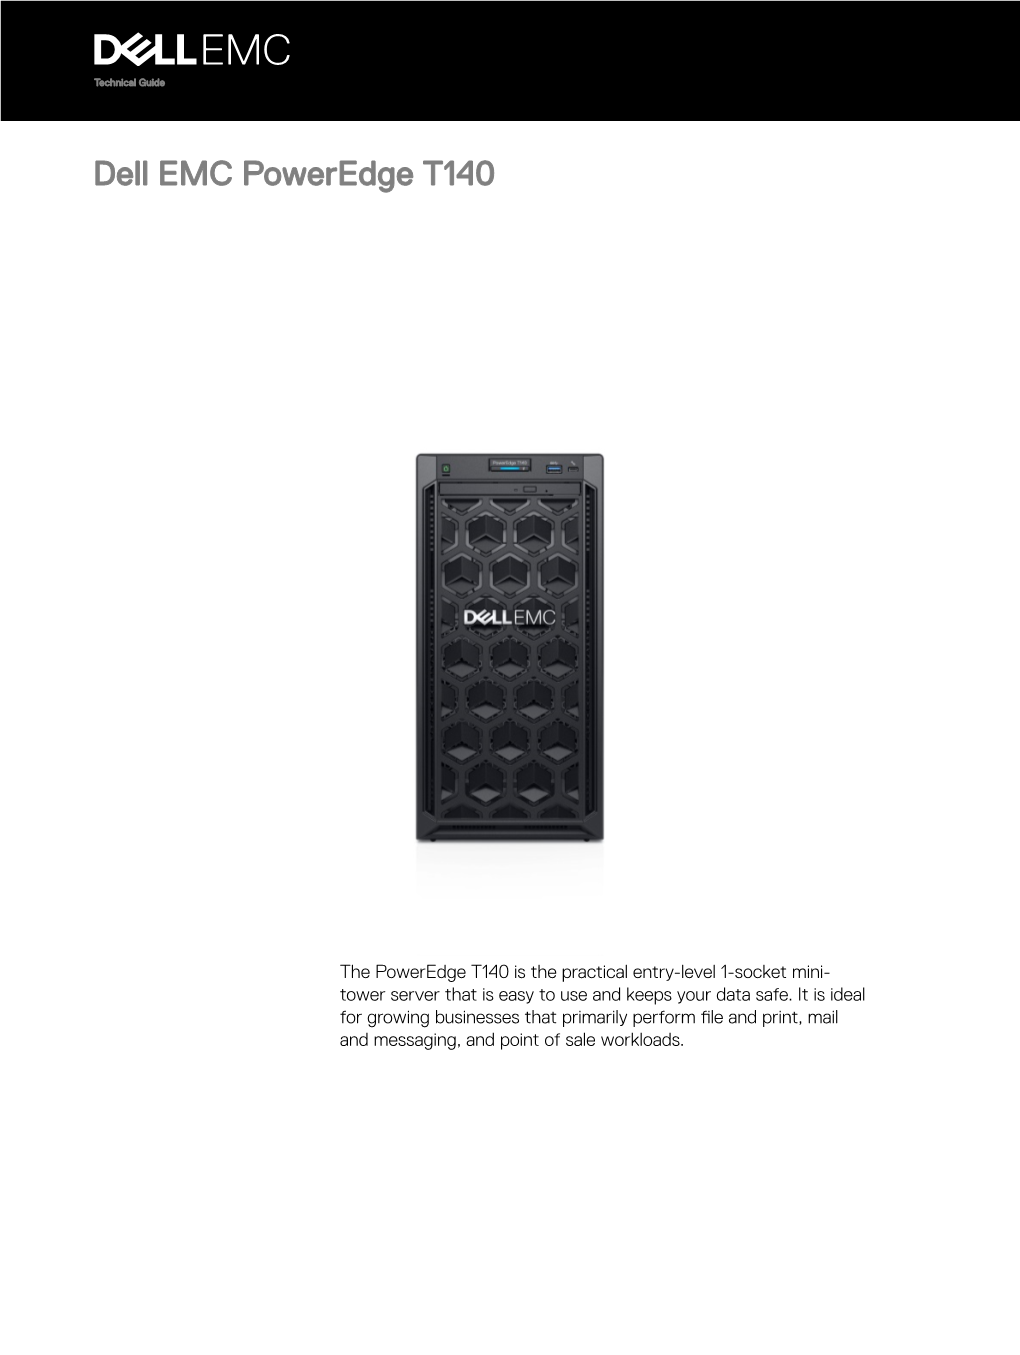 Dell EMC Poweredge T140 Technical Guide